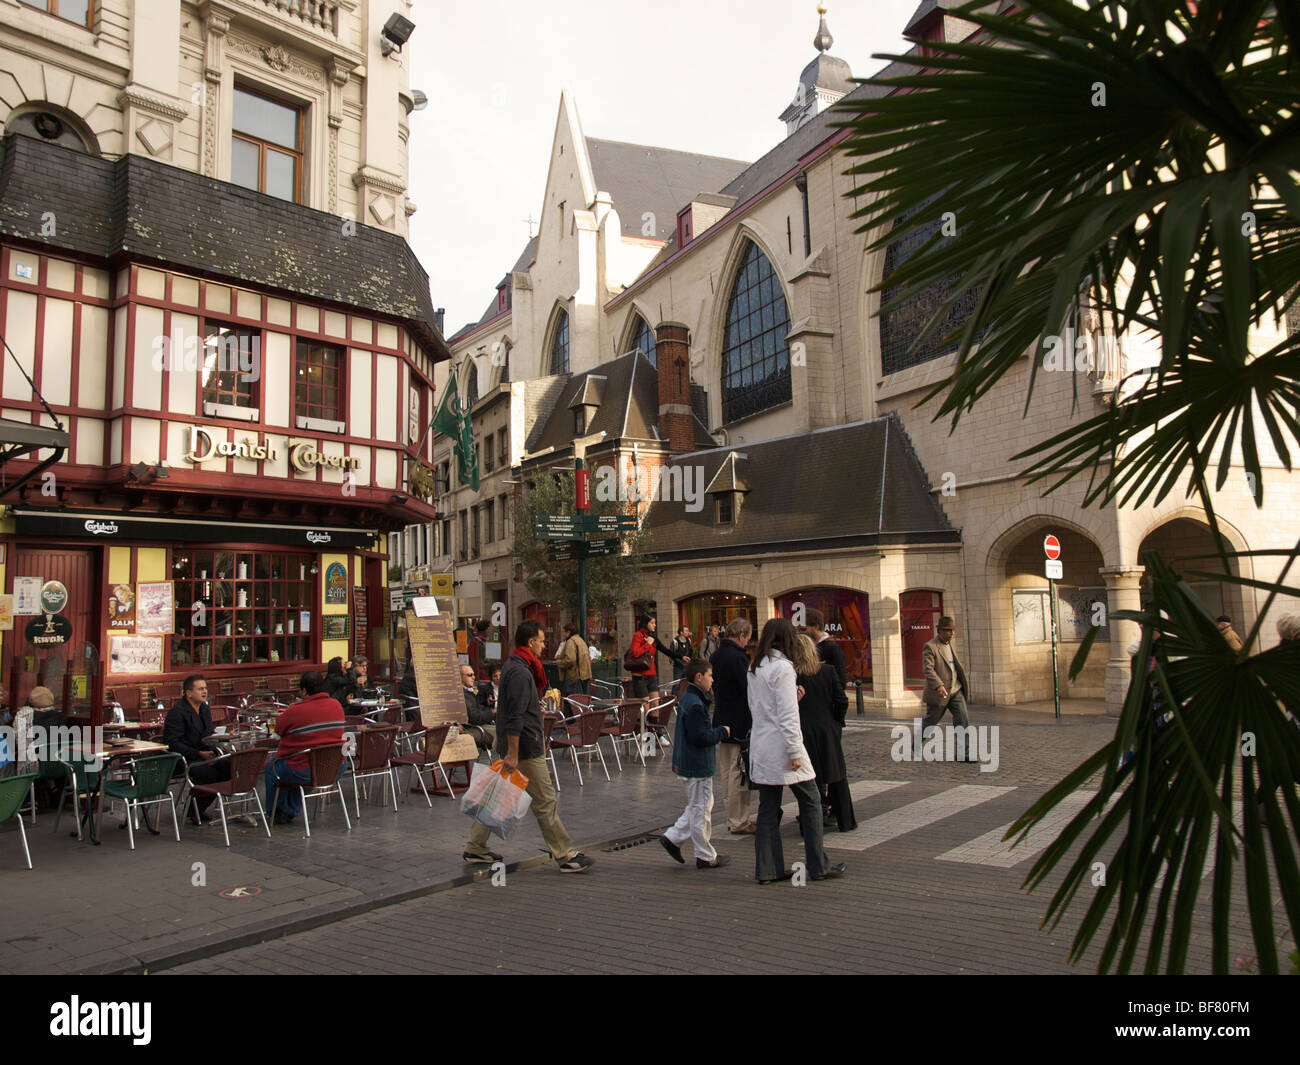 Street scene in Brussels, Belgium, with church and Danish tavern Stock Photo